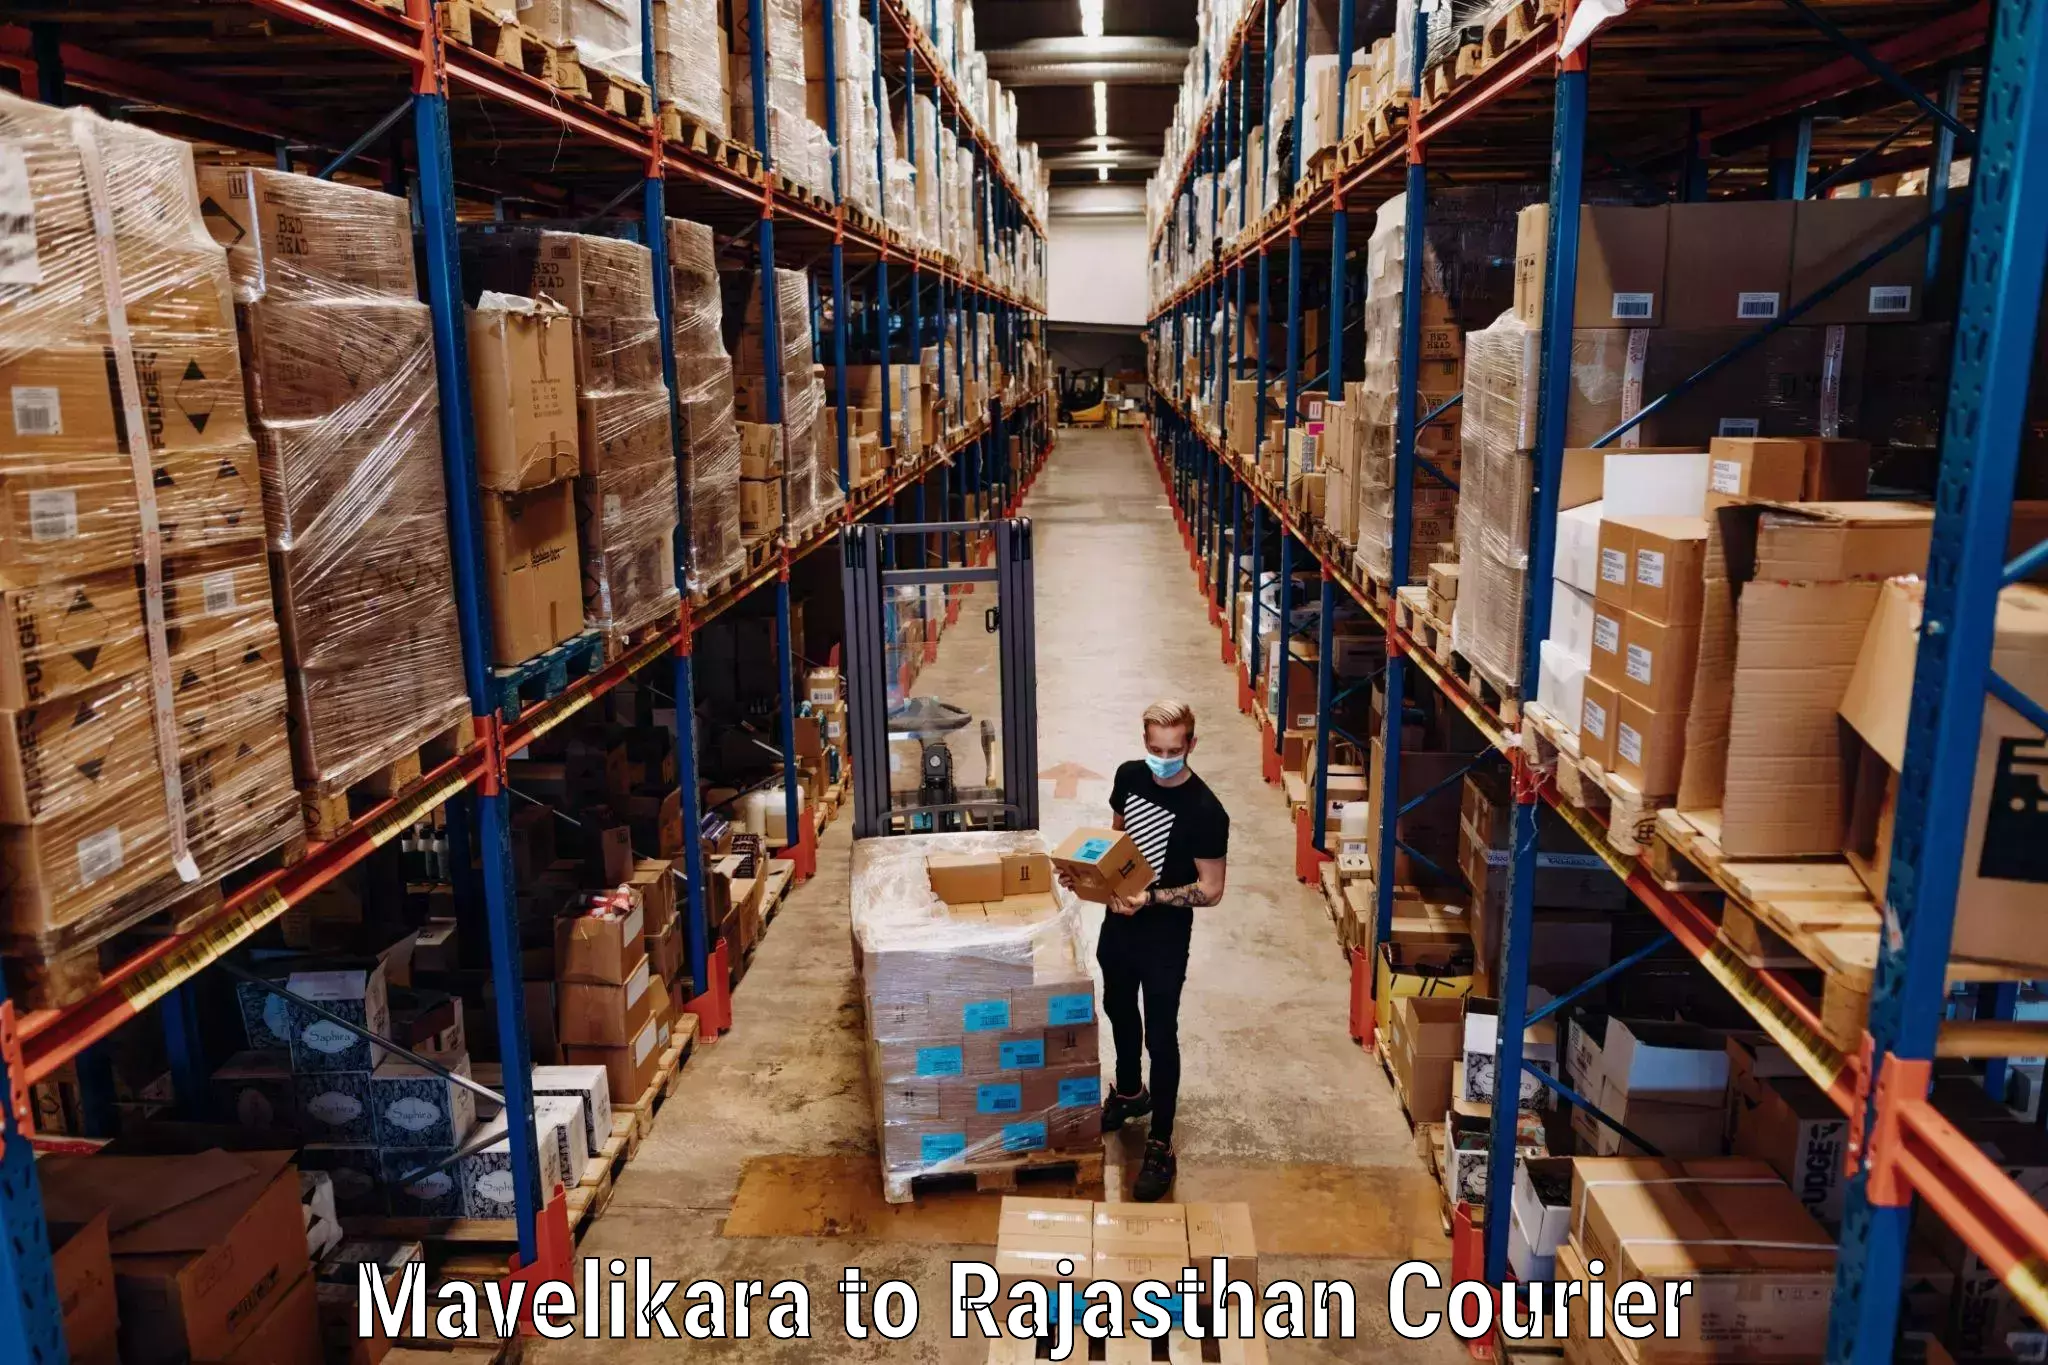 Baggage shipping experts Mavelikara to Rajasthan